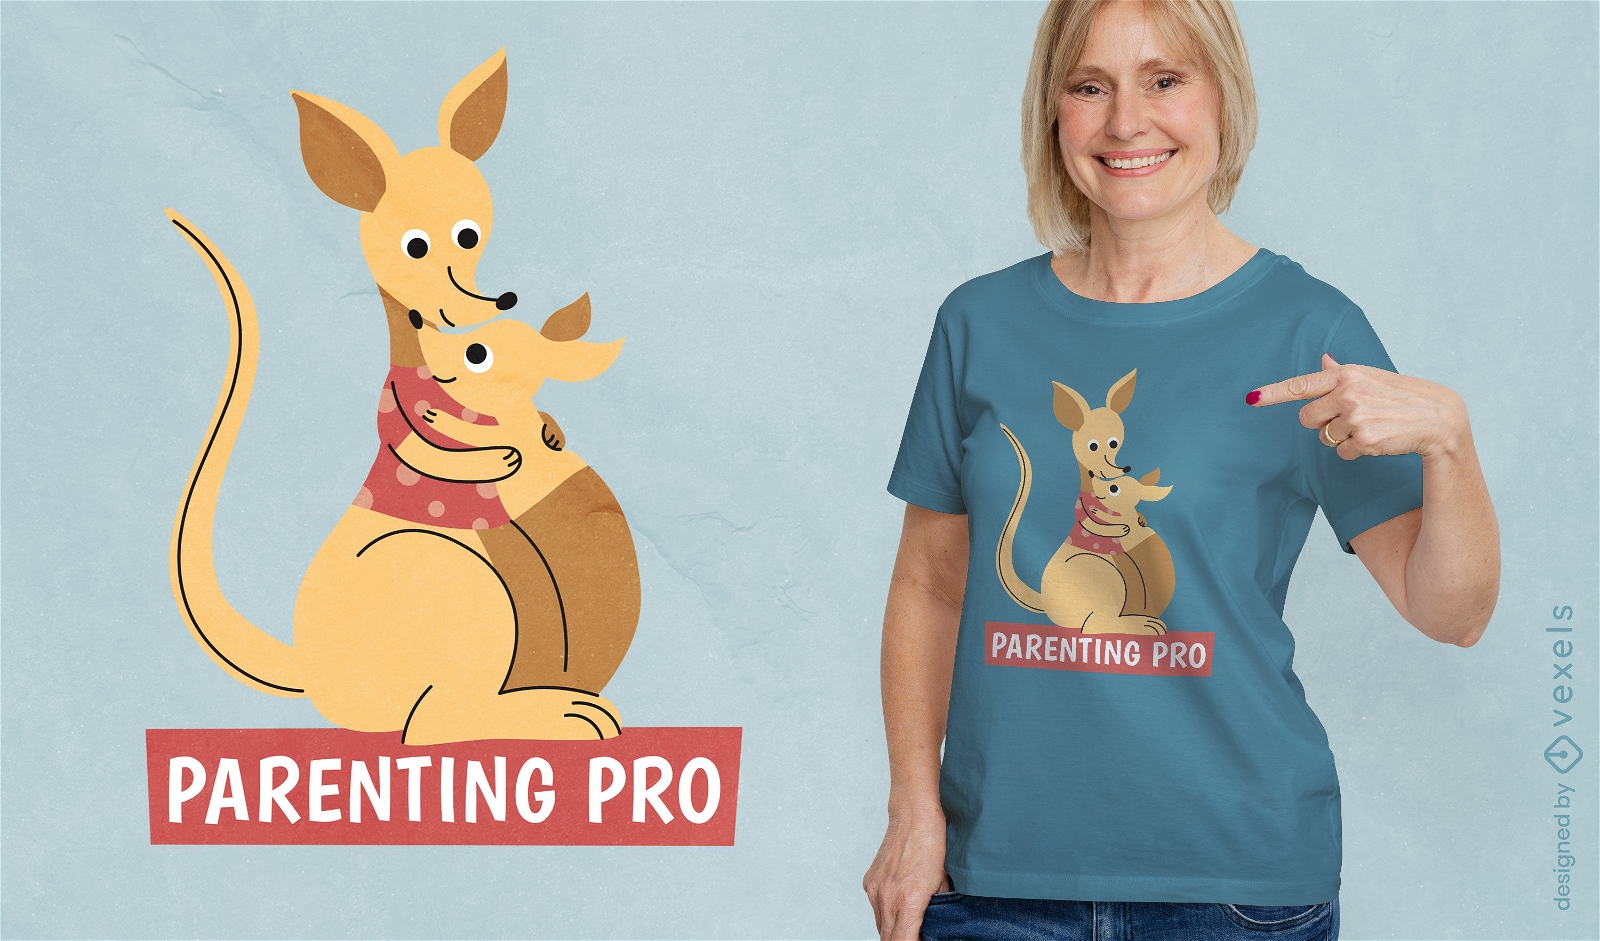 Parenting pro kangaroo mom t-shirt design